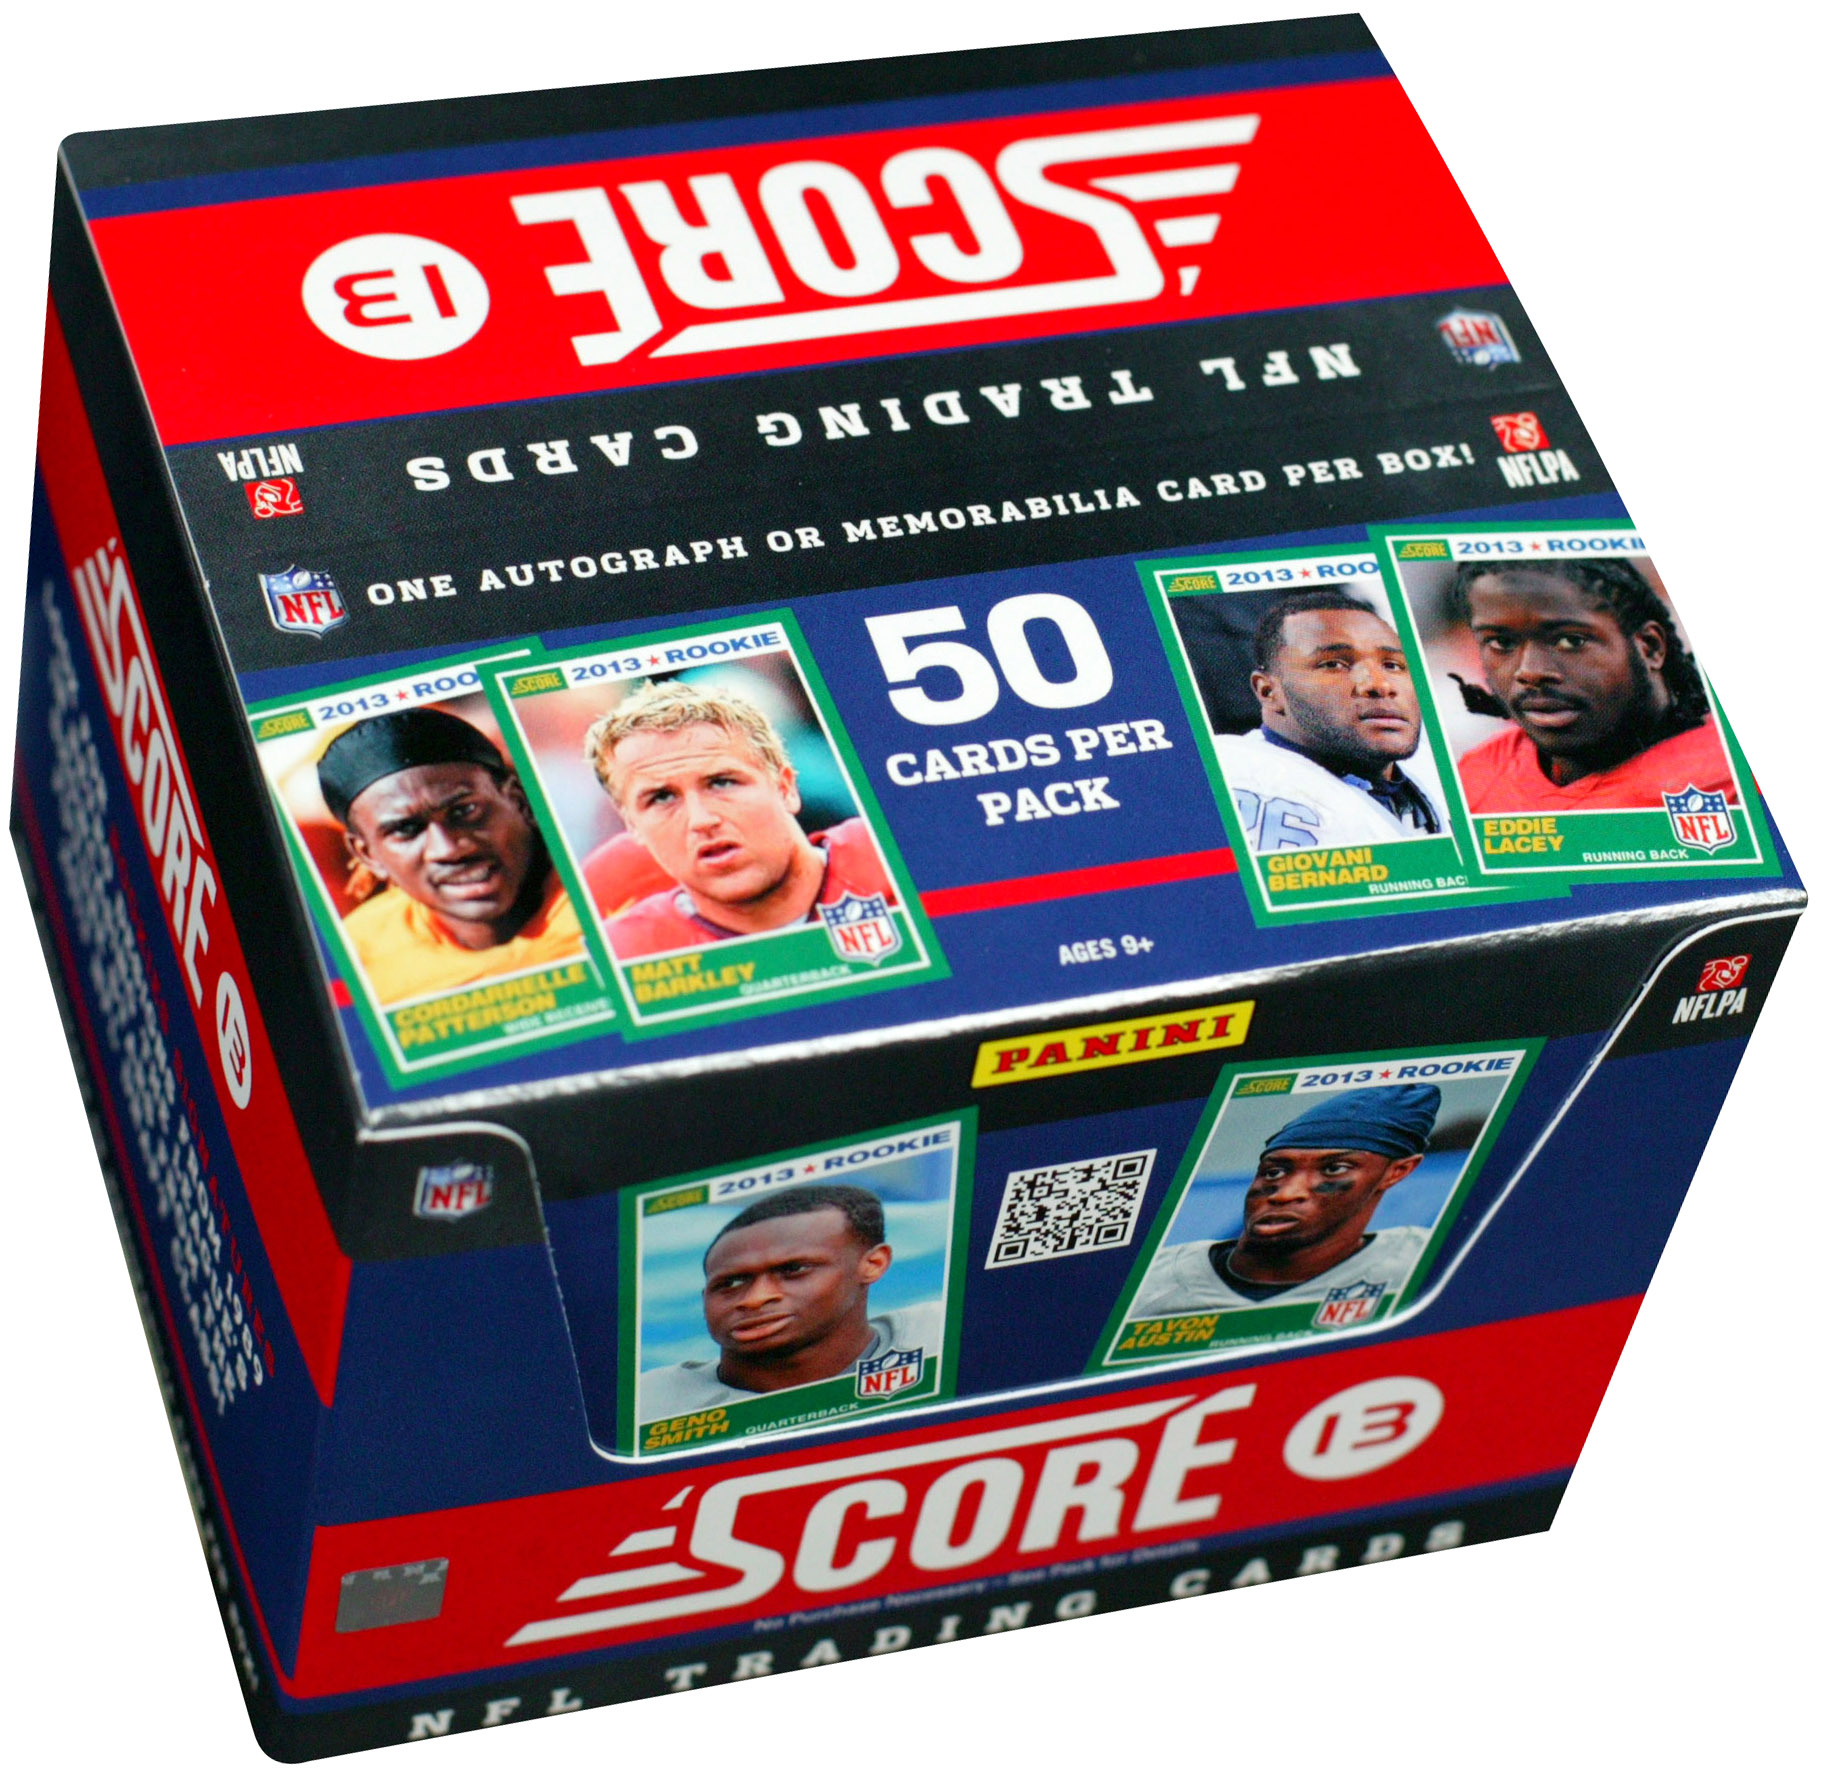 2013 Score Football Retail Box card image